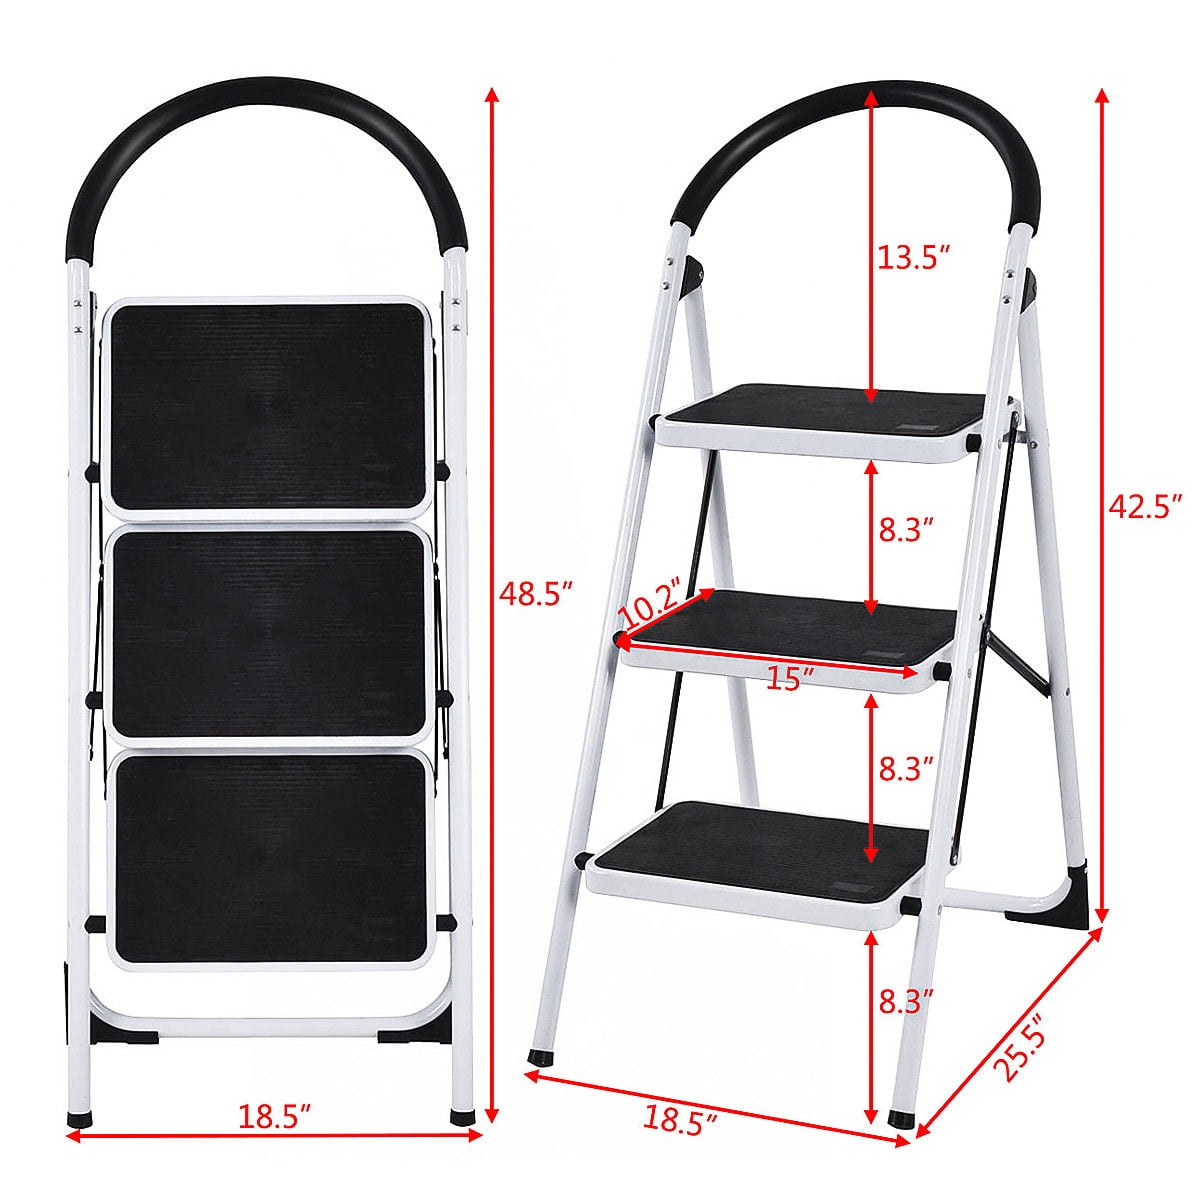 Oshion 3 Step Ladder Platform Folding Stool 330lbs Capacity Non Slip Safety Tread Space Saving Industrial Home Use